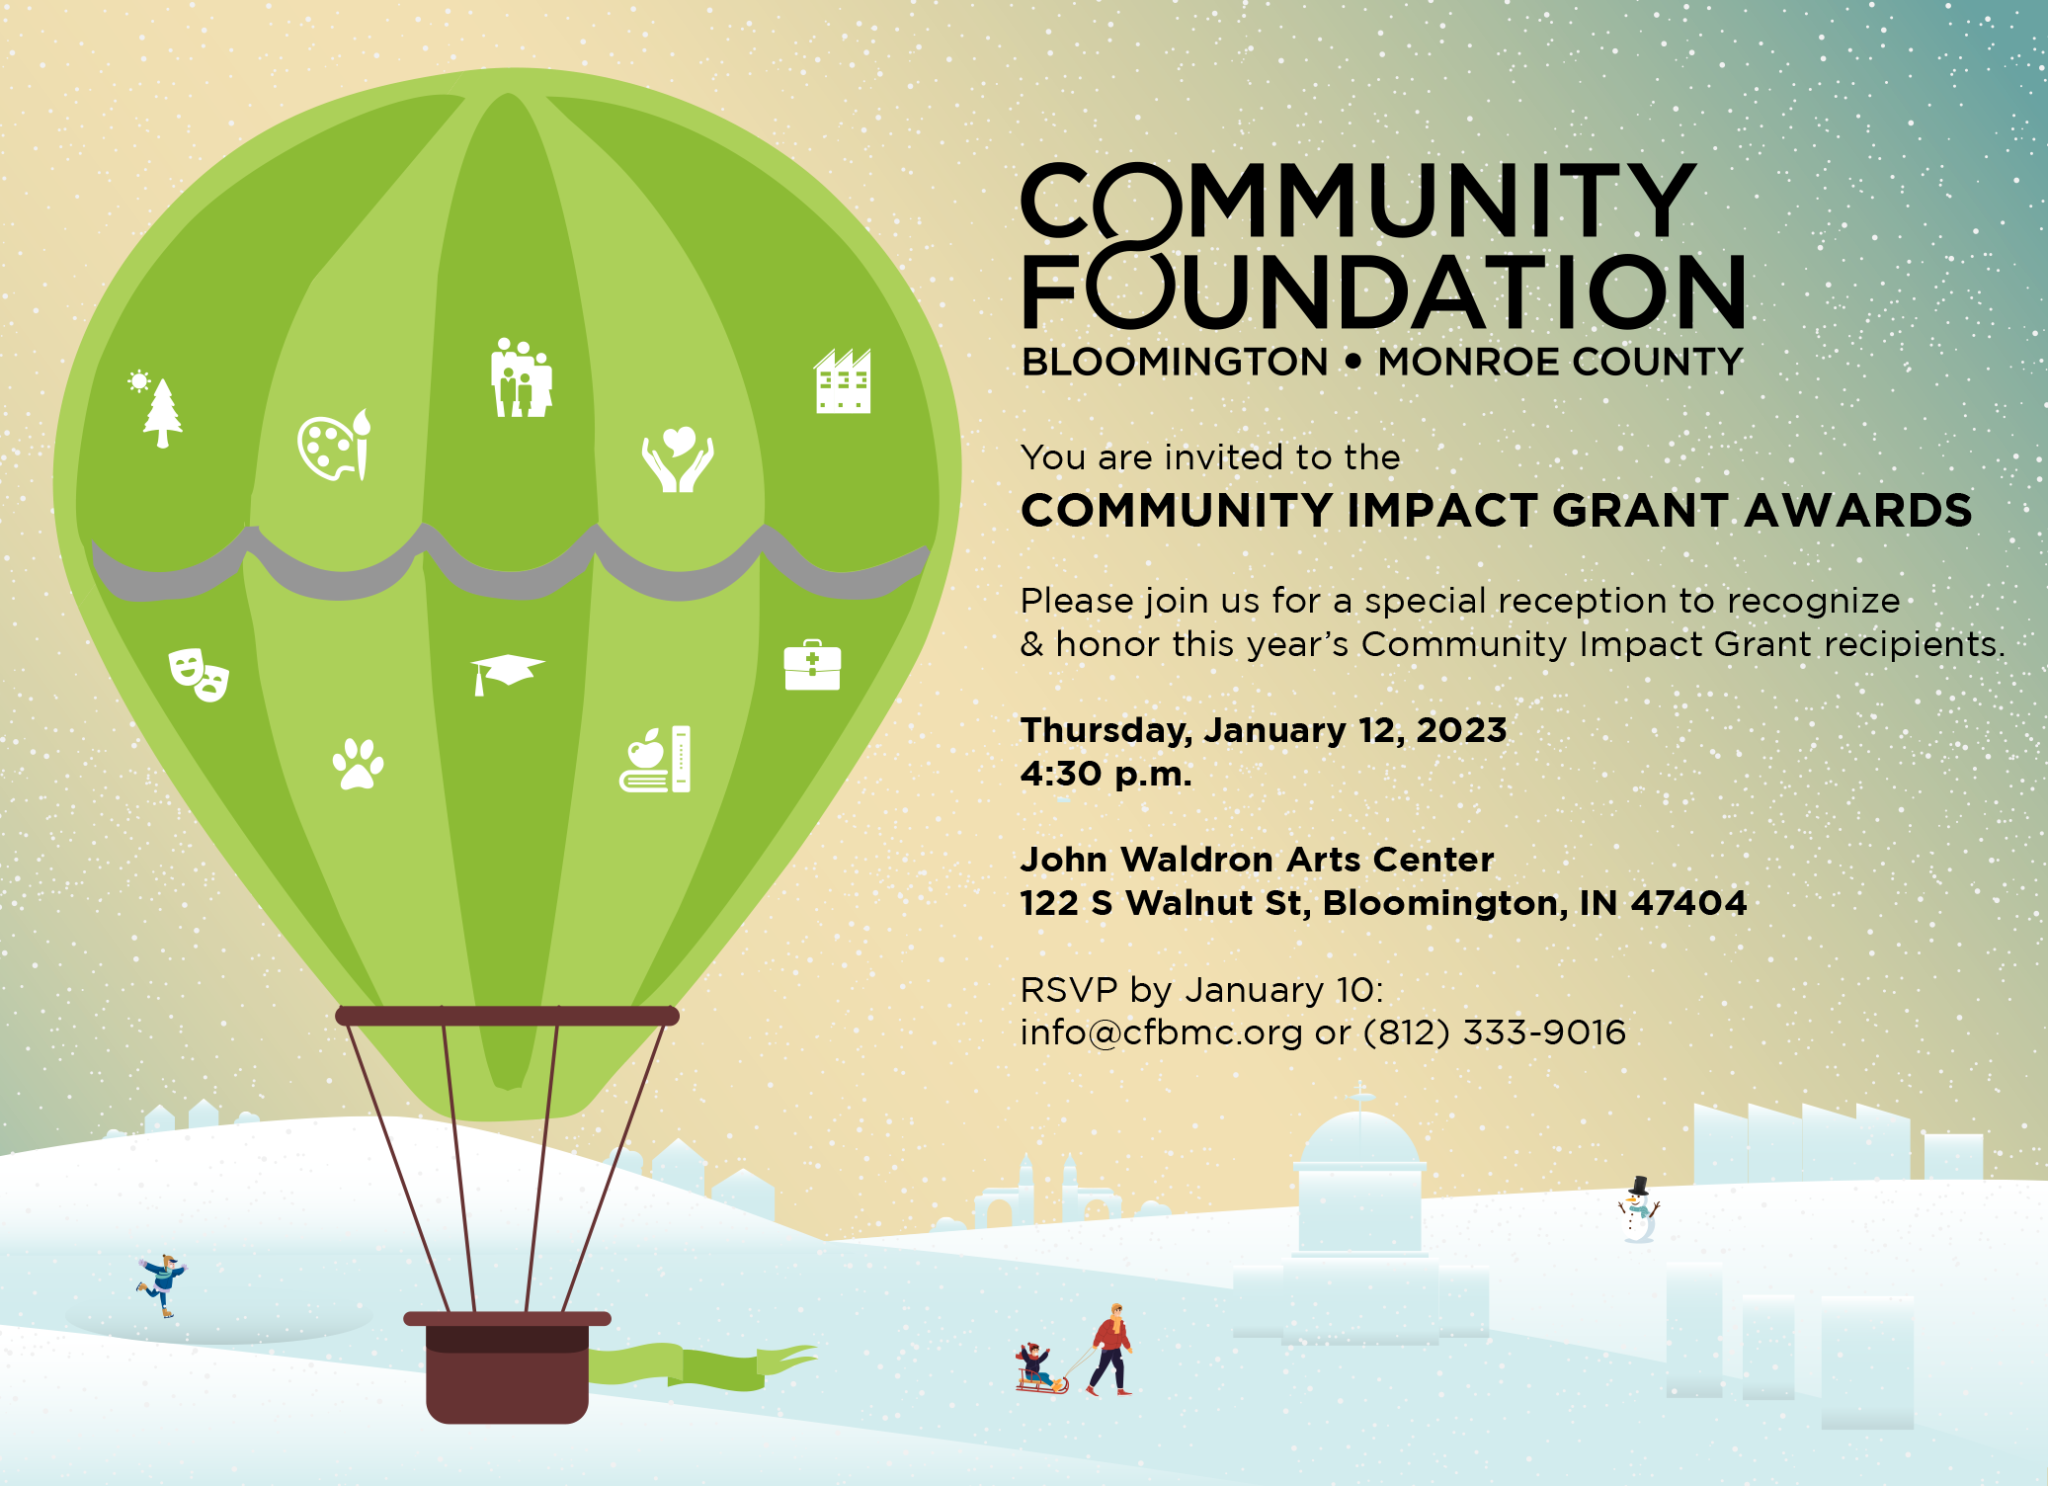 Jan 12 Community Impact Grant Awards Community Foundation of